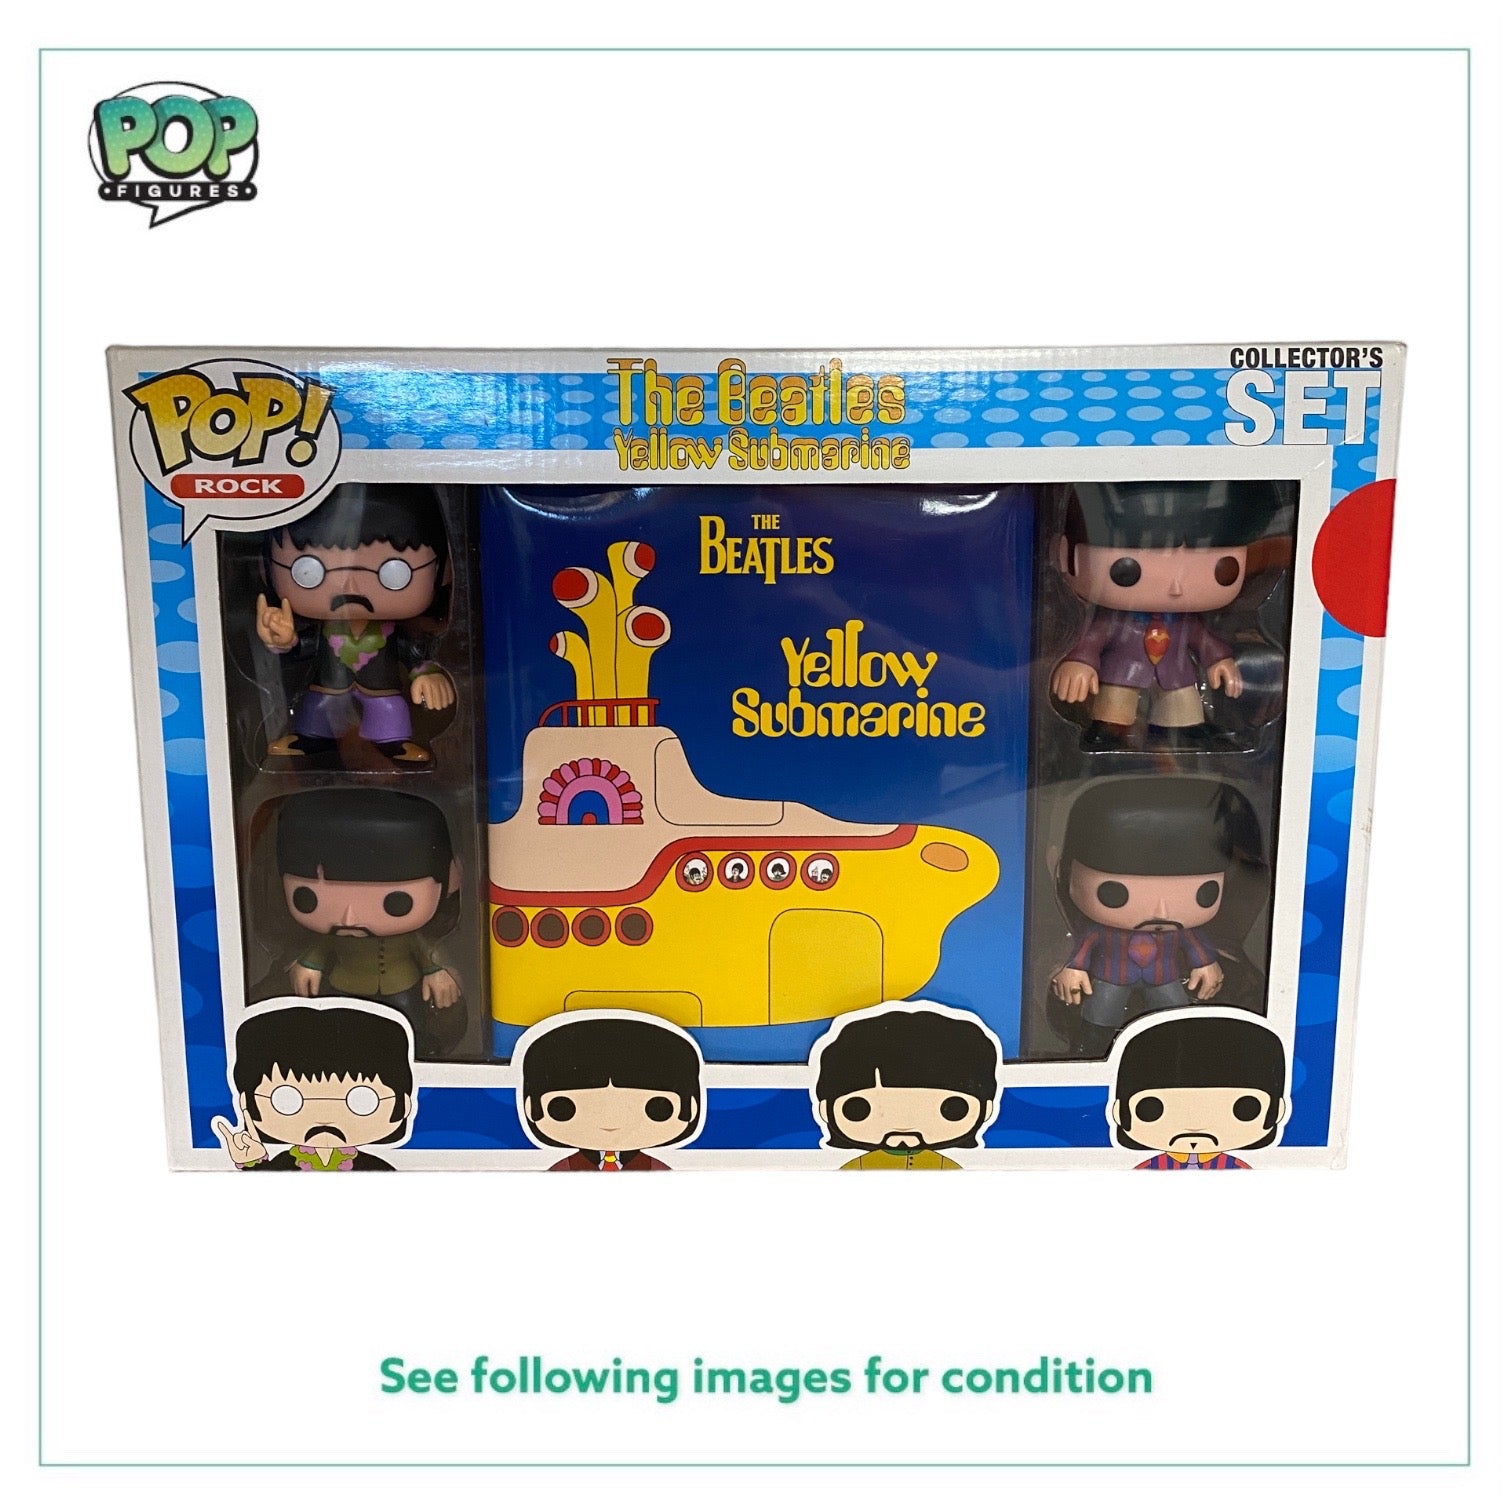 The Beatles Yellow Submarine 4 Pack Funko Pop Collectors Set! - Rocks - 2012 Pop! - Condition 8/10